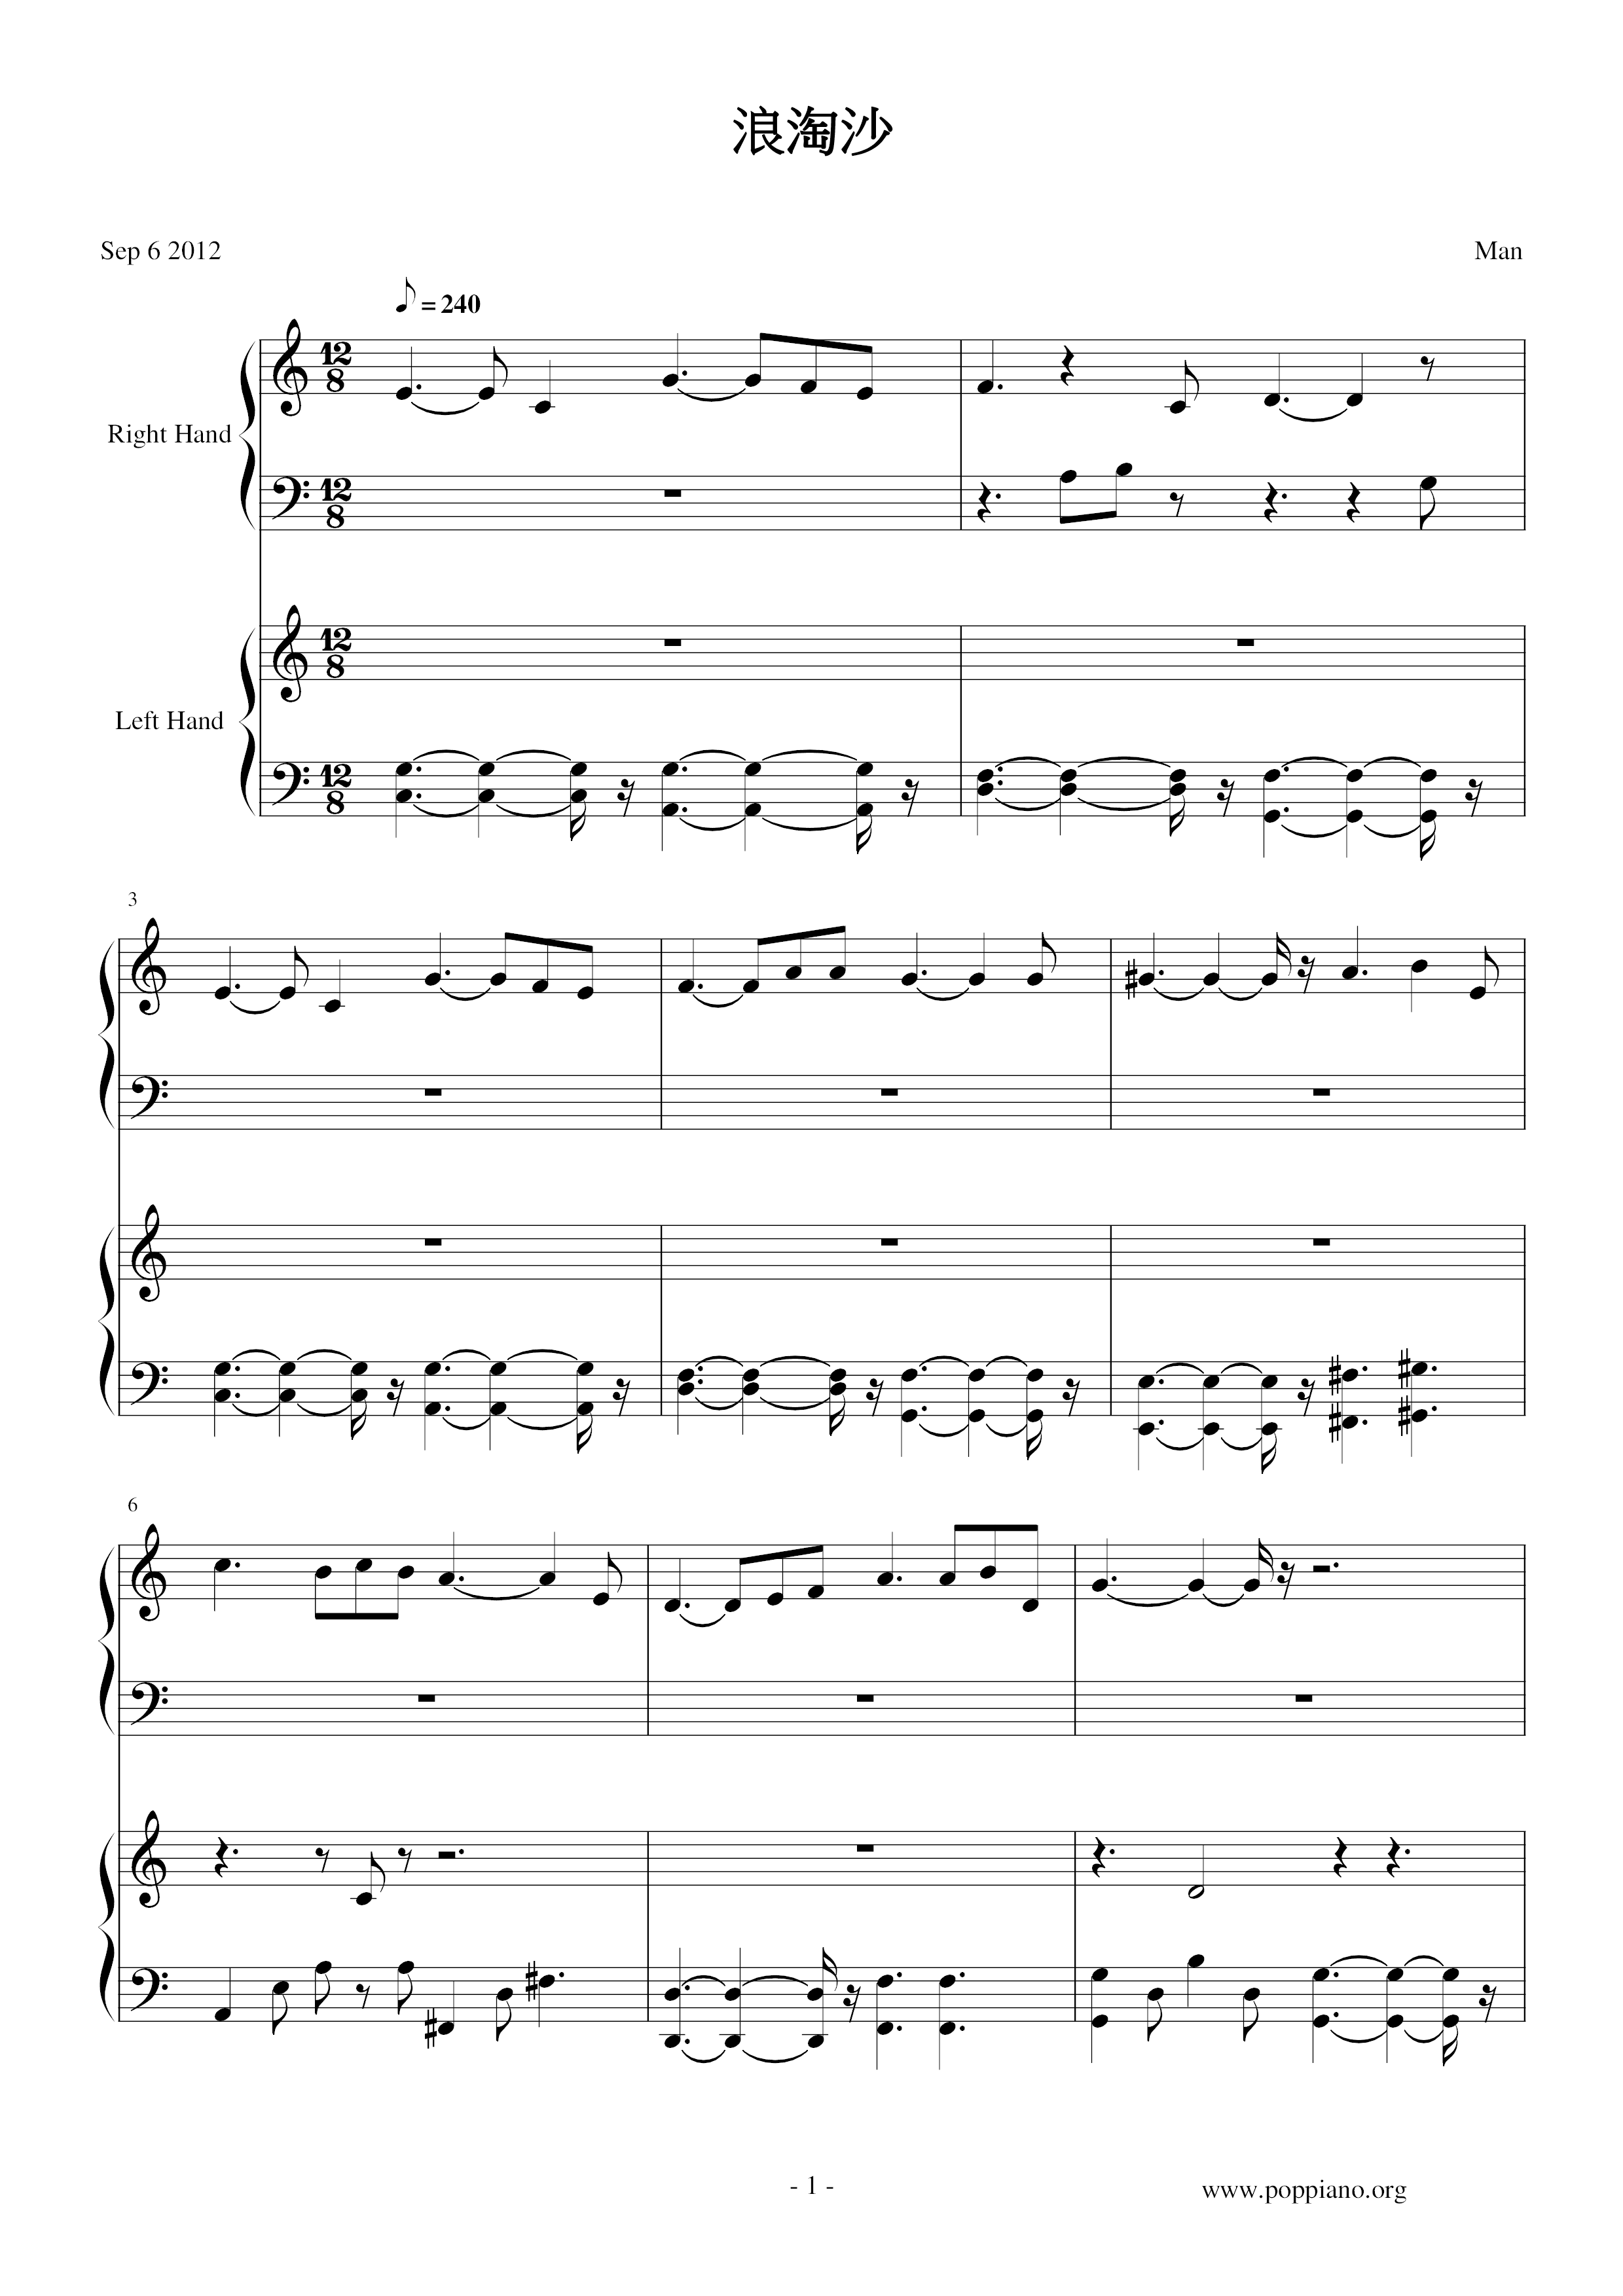 Langtaosha Score